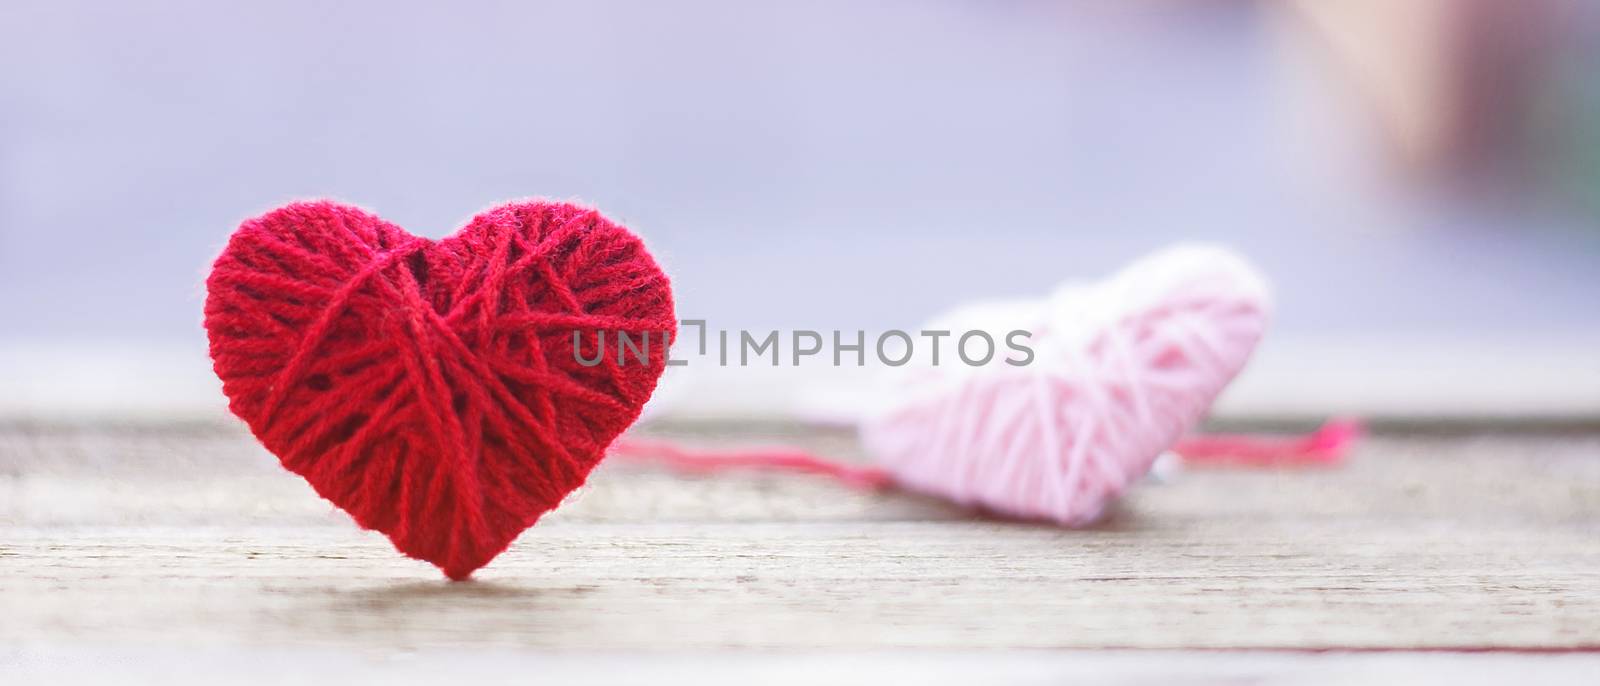 red knitting wool in shape of heart on vintage wooden with bokeh by rakoptonLPN